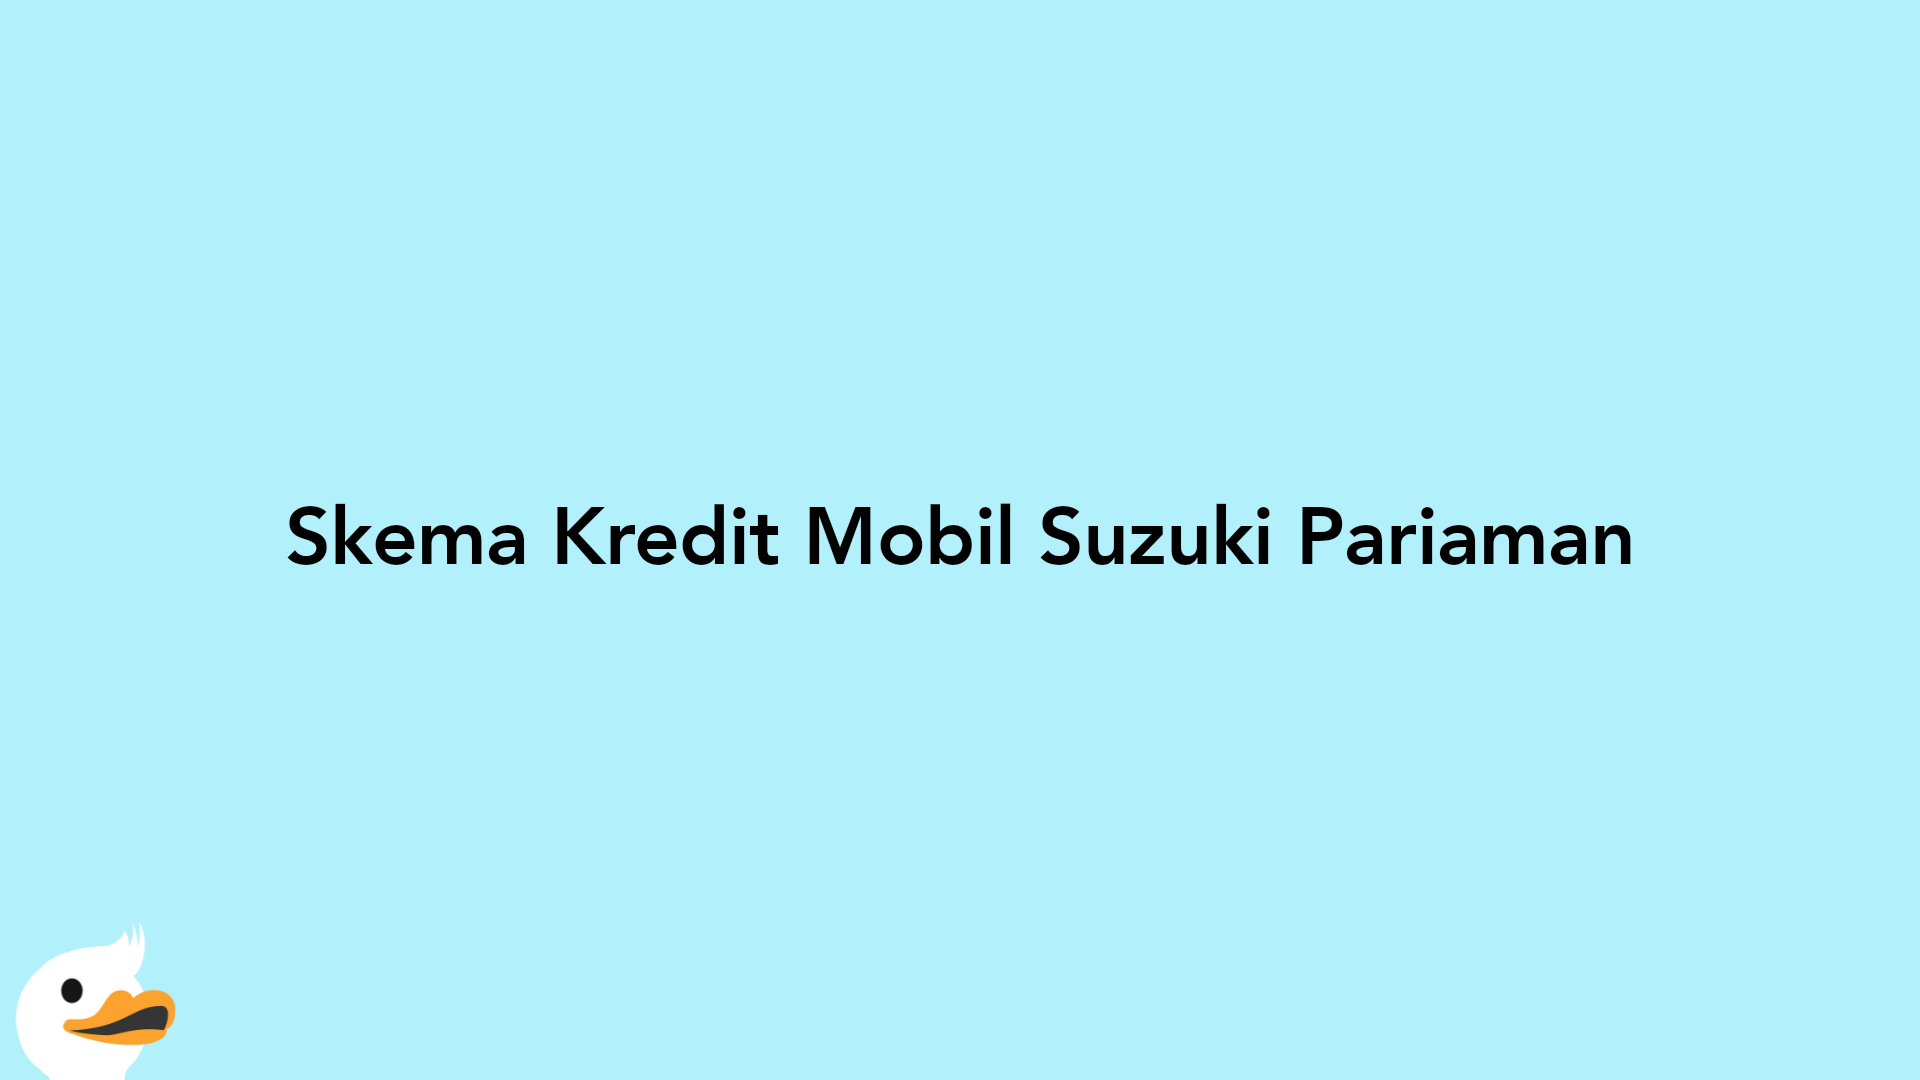 Skema Kredit Mobil Suzuki Pariaman